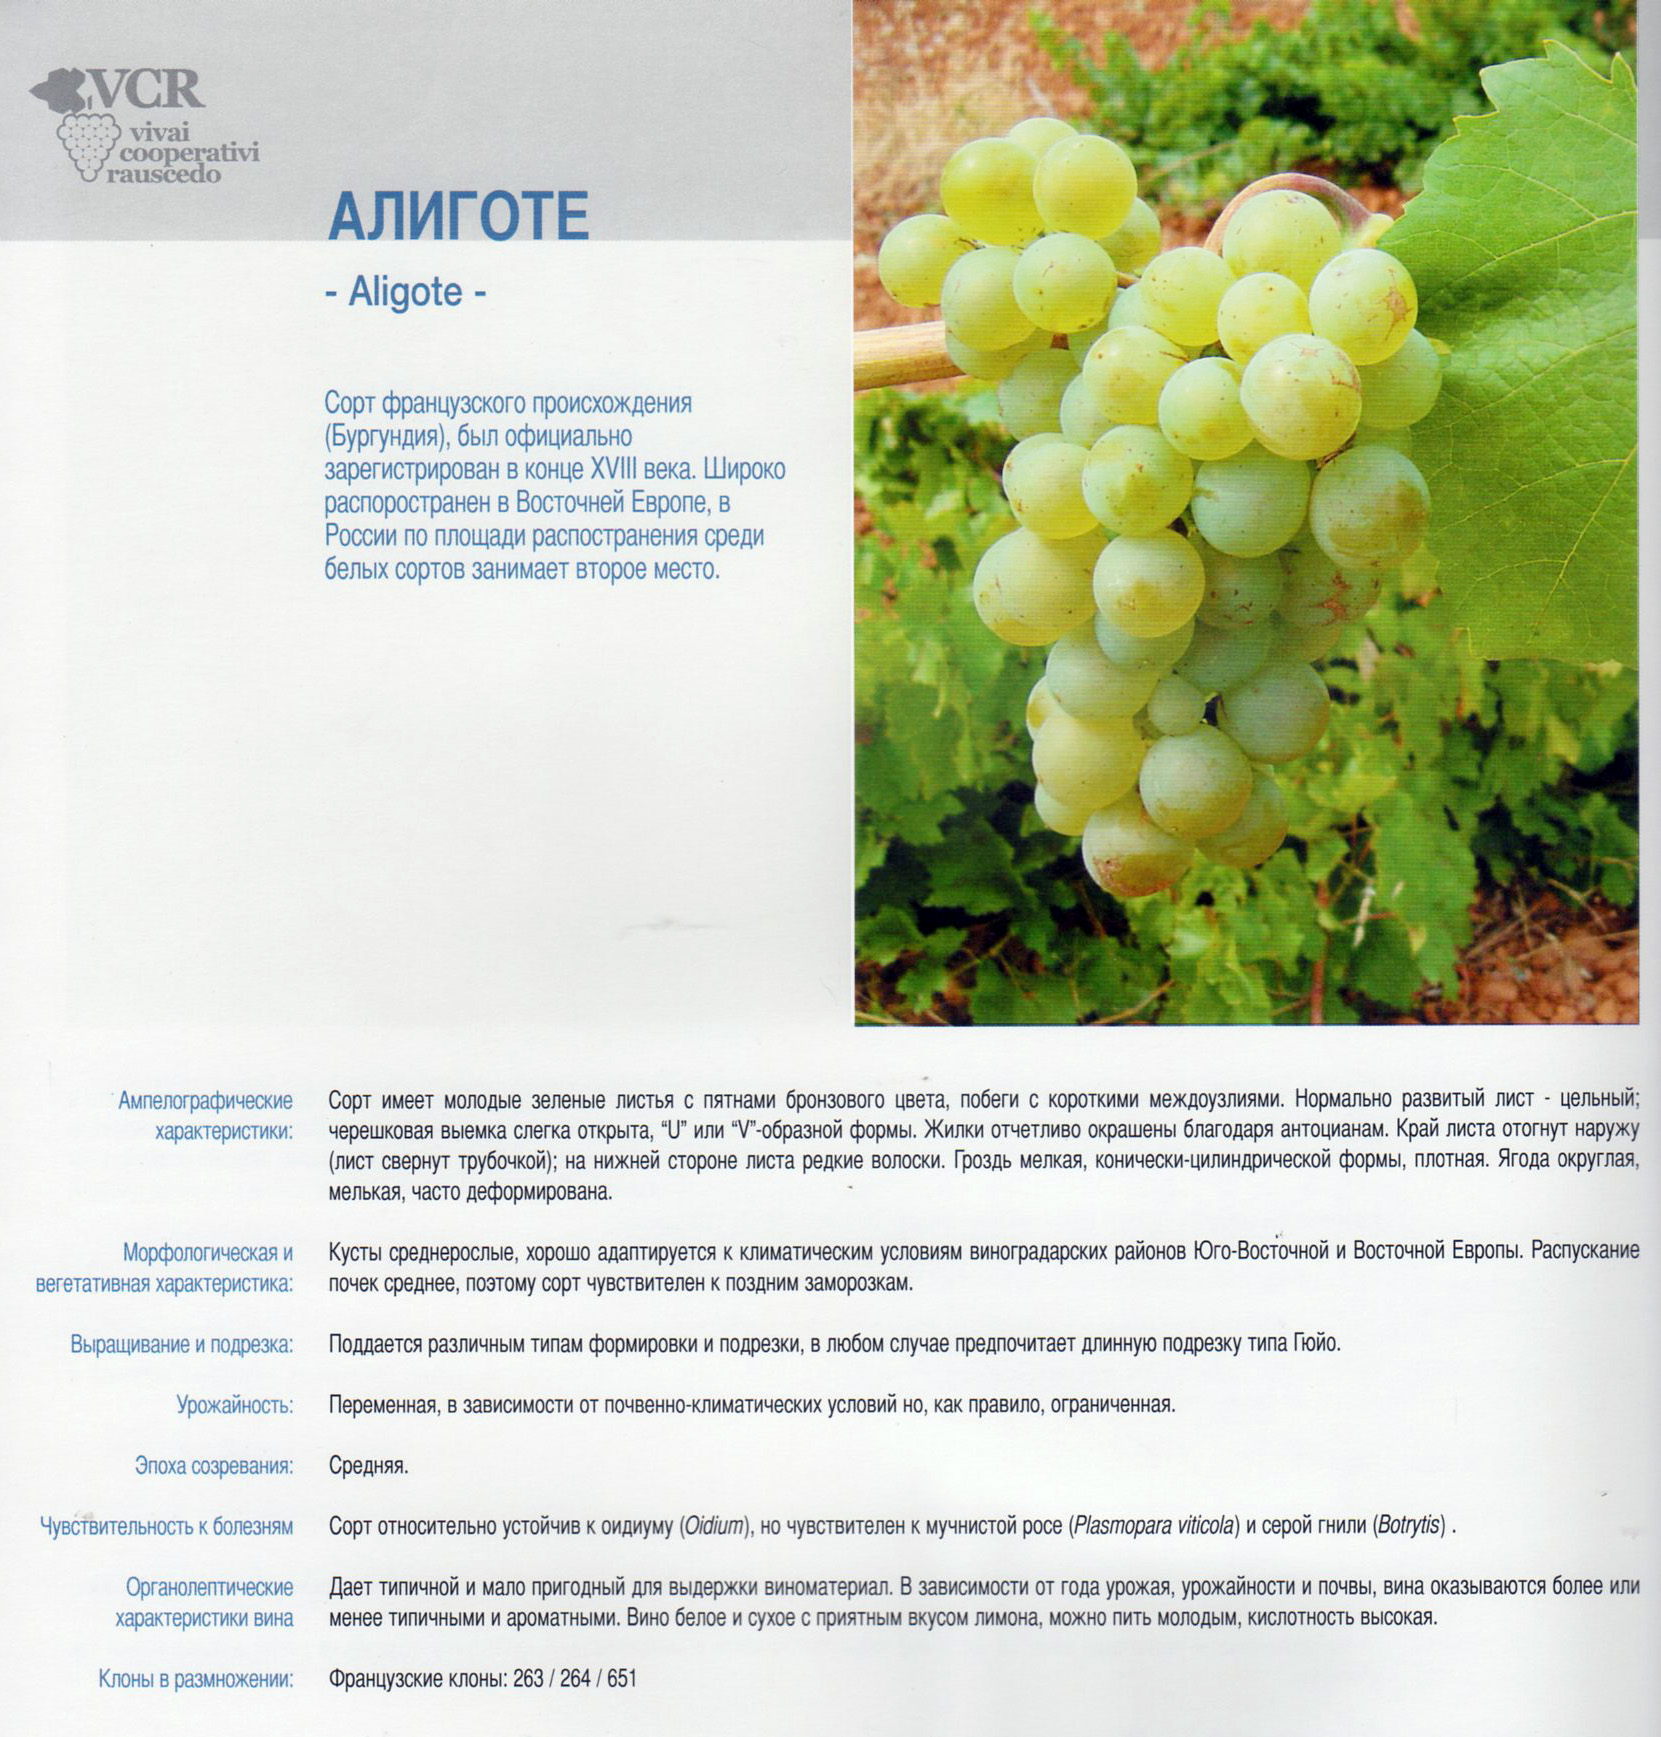 Шардоне - технический сорт винограда